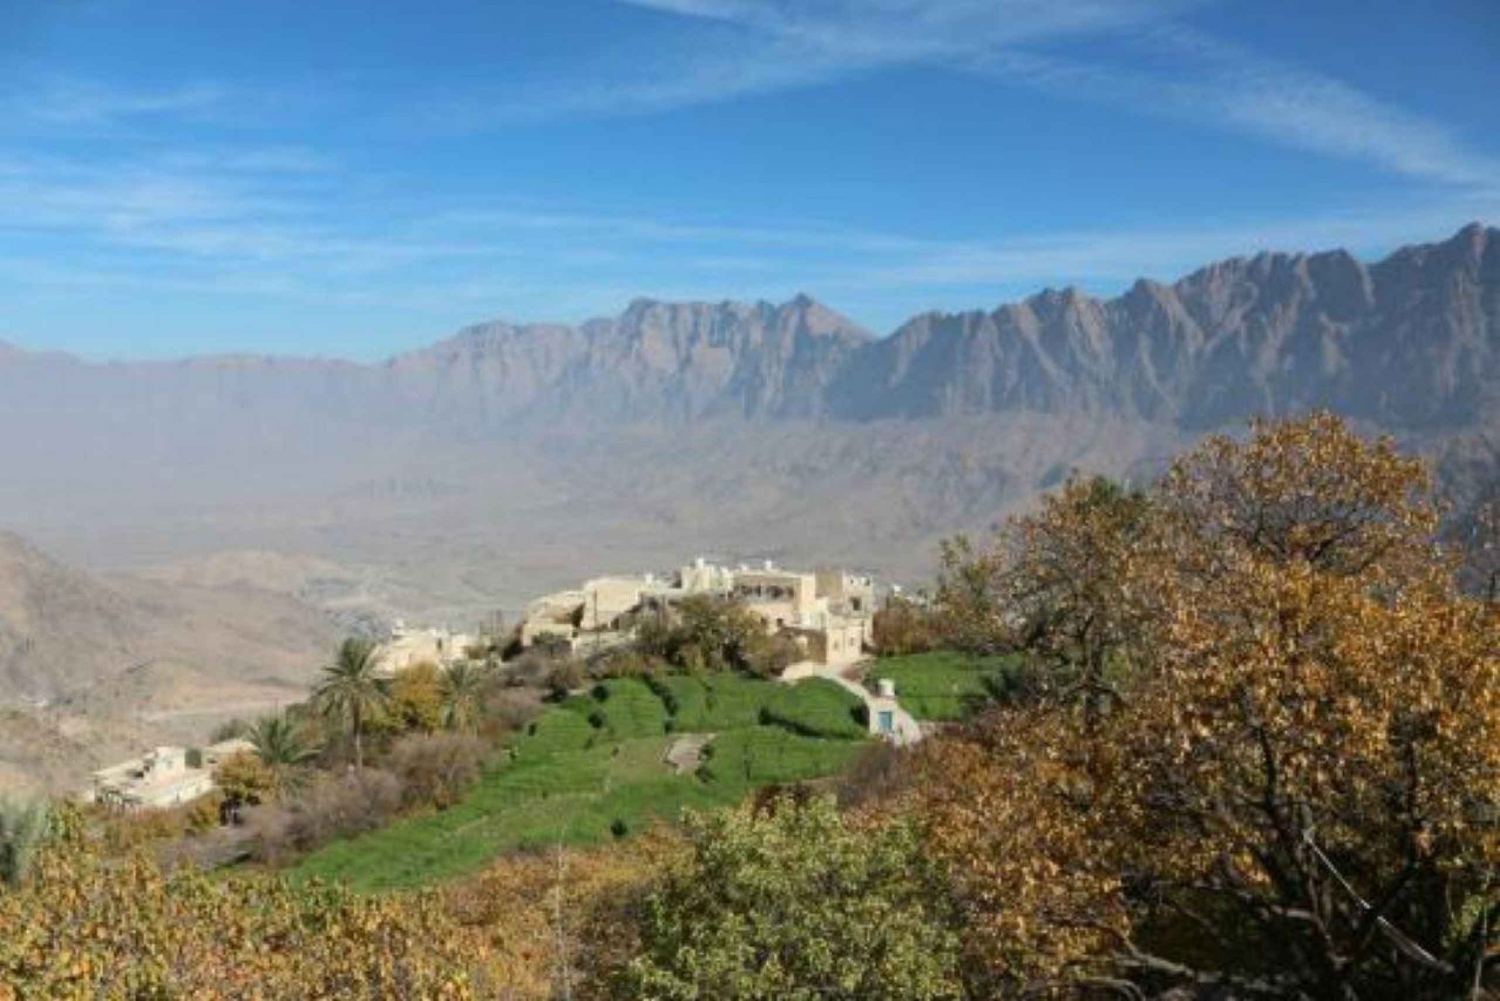 Dagstur til Wadi Bani Awf, Balad Sayt, landsbyen Wekan og Nakhal